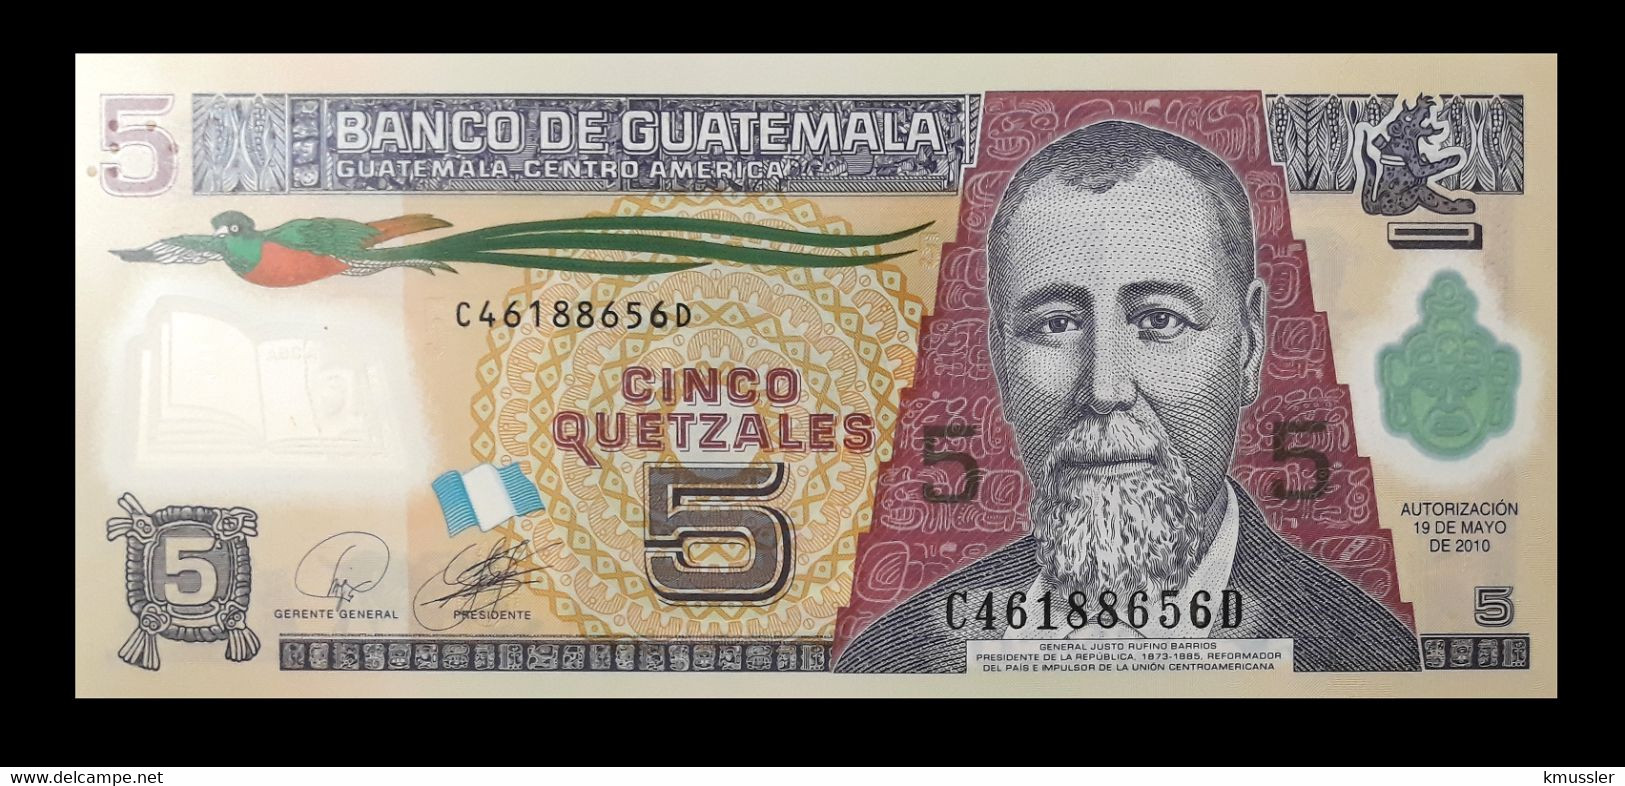 # # # Banknote Aus Guatemala 5 Quetzales 2010 UNC # # # - Guatemala